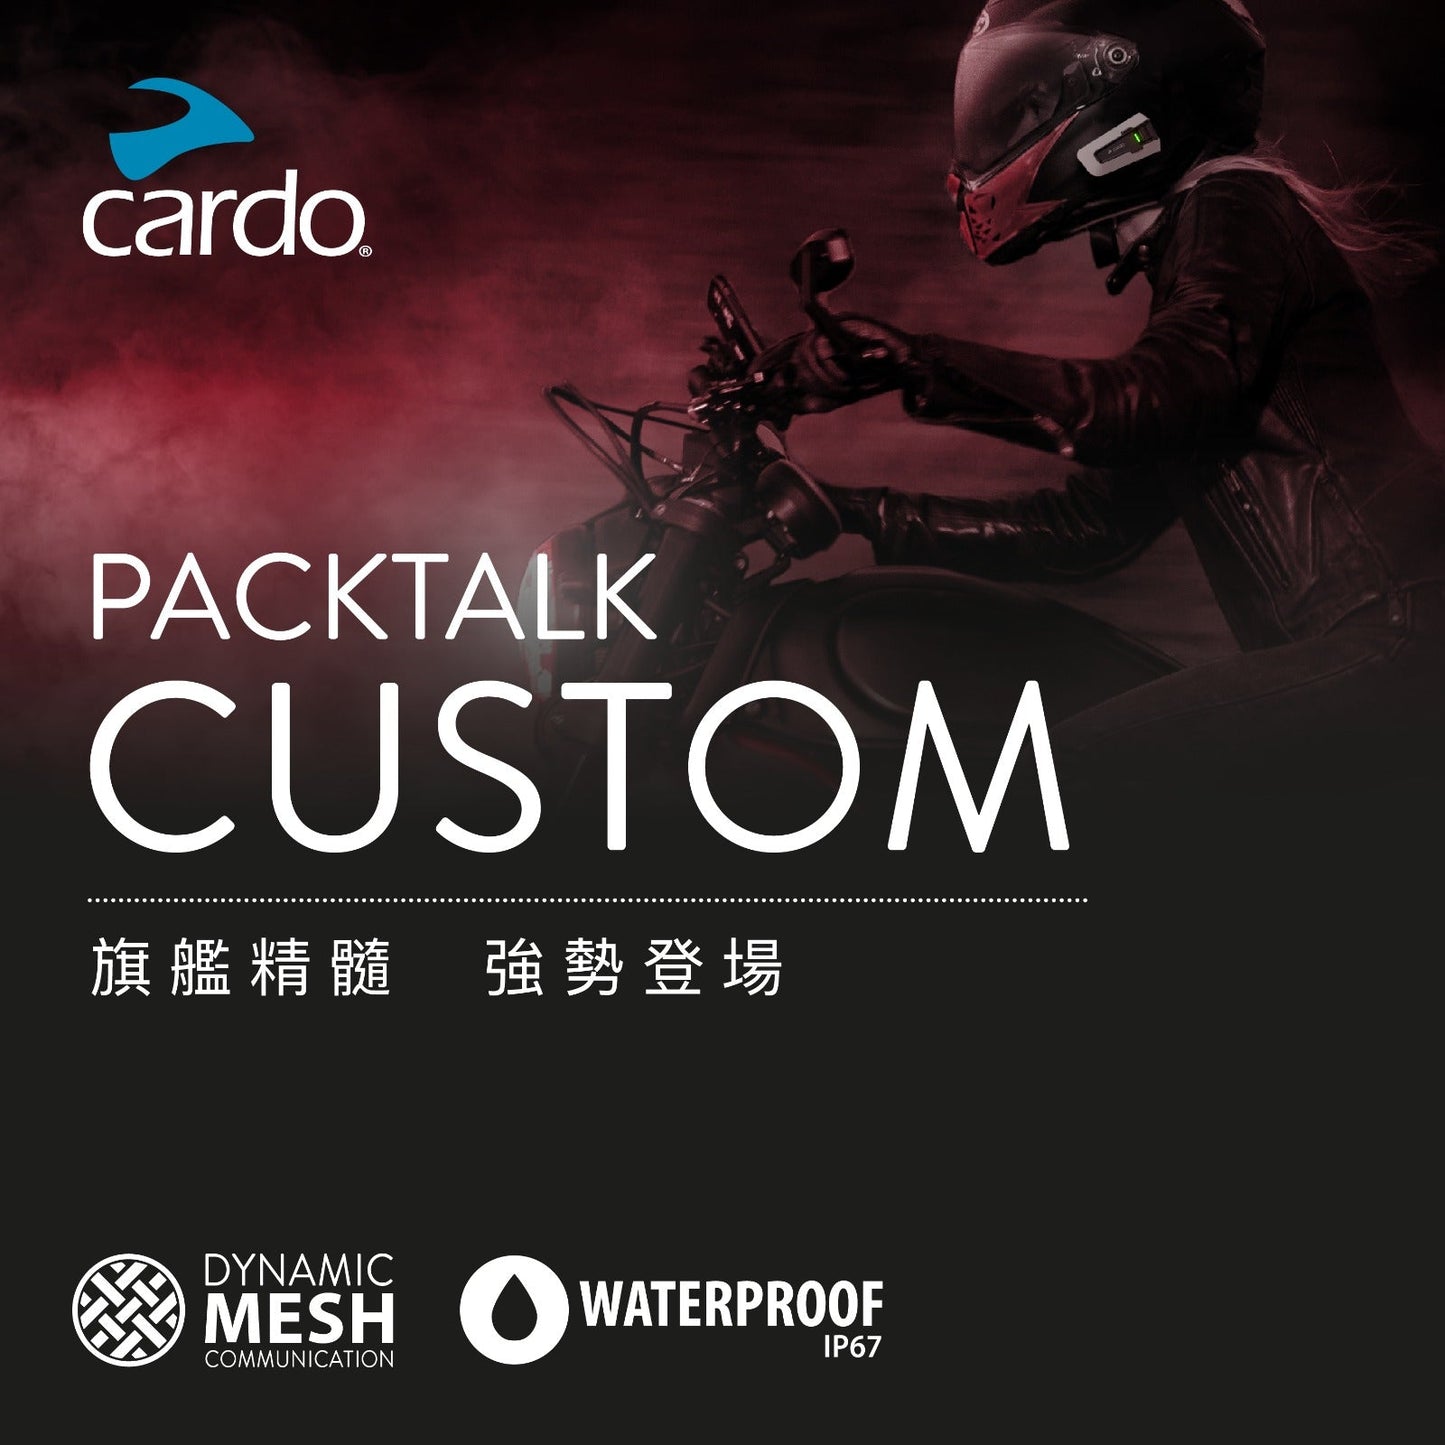 Cardo Packtalk Custom (單機) - 孖轆雜貨鋪 #皮包鐵# #電單車26#